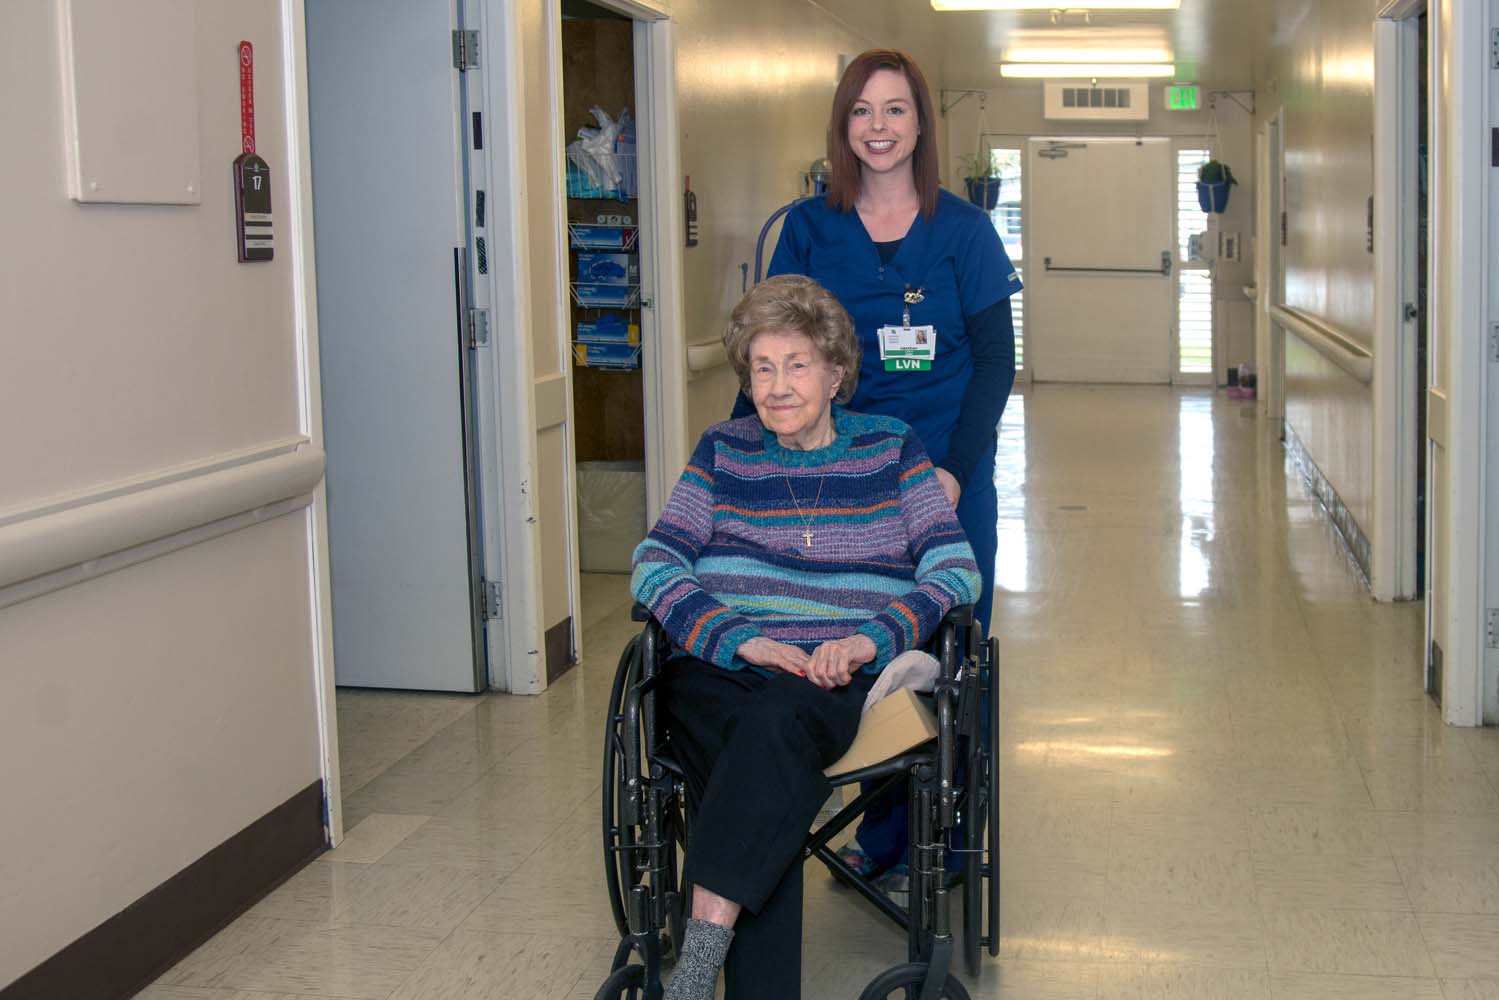 Nurse pushing person in wheel chair.